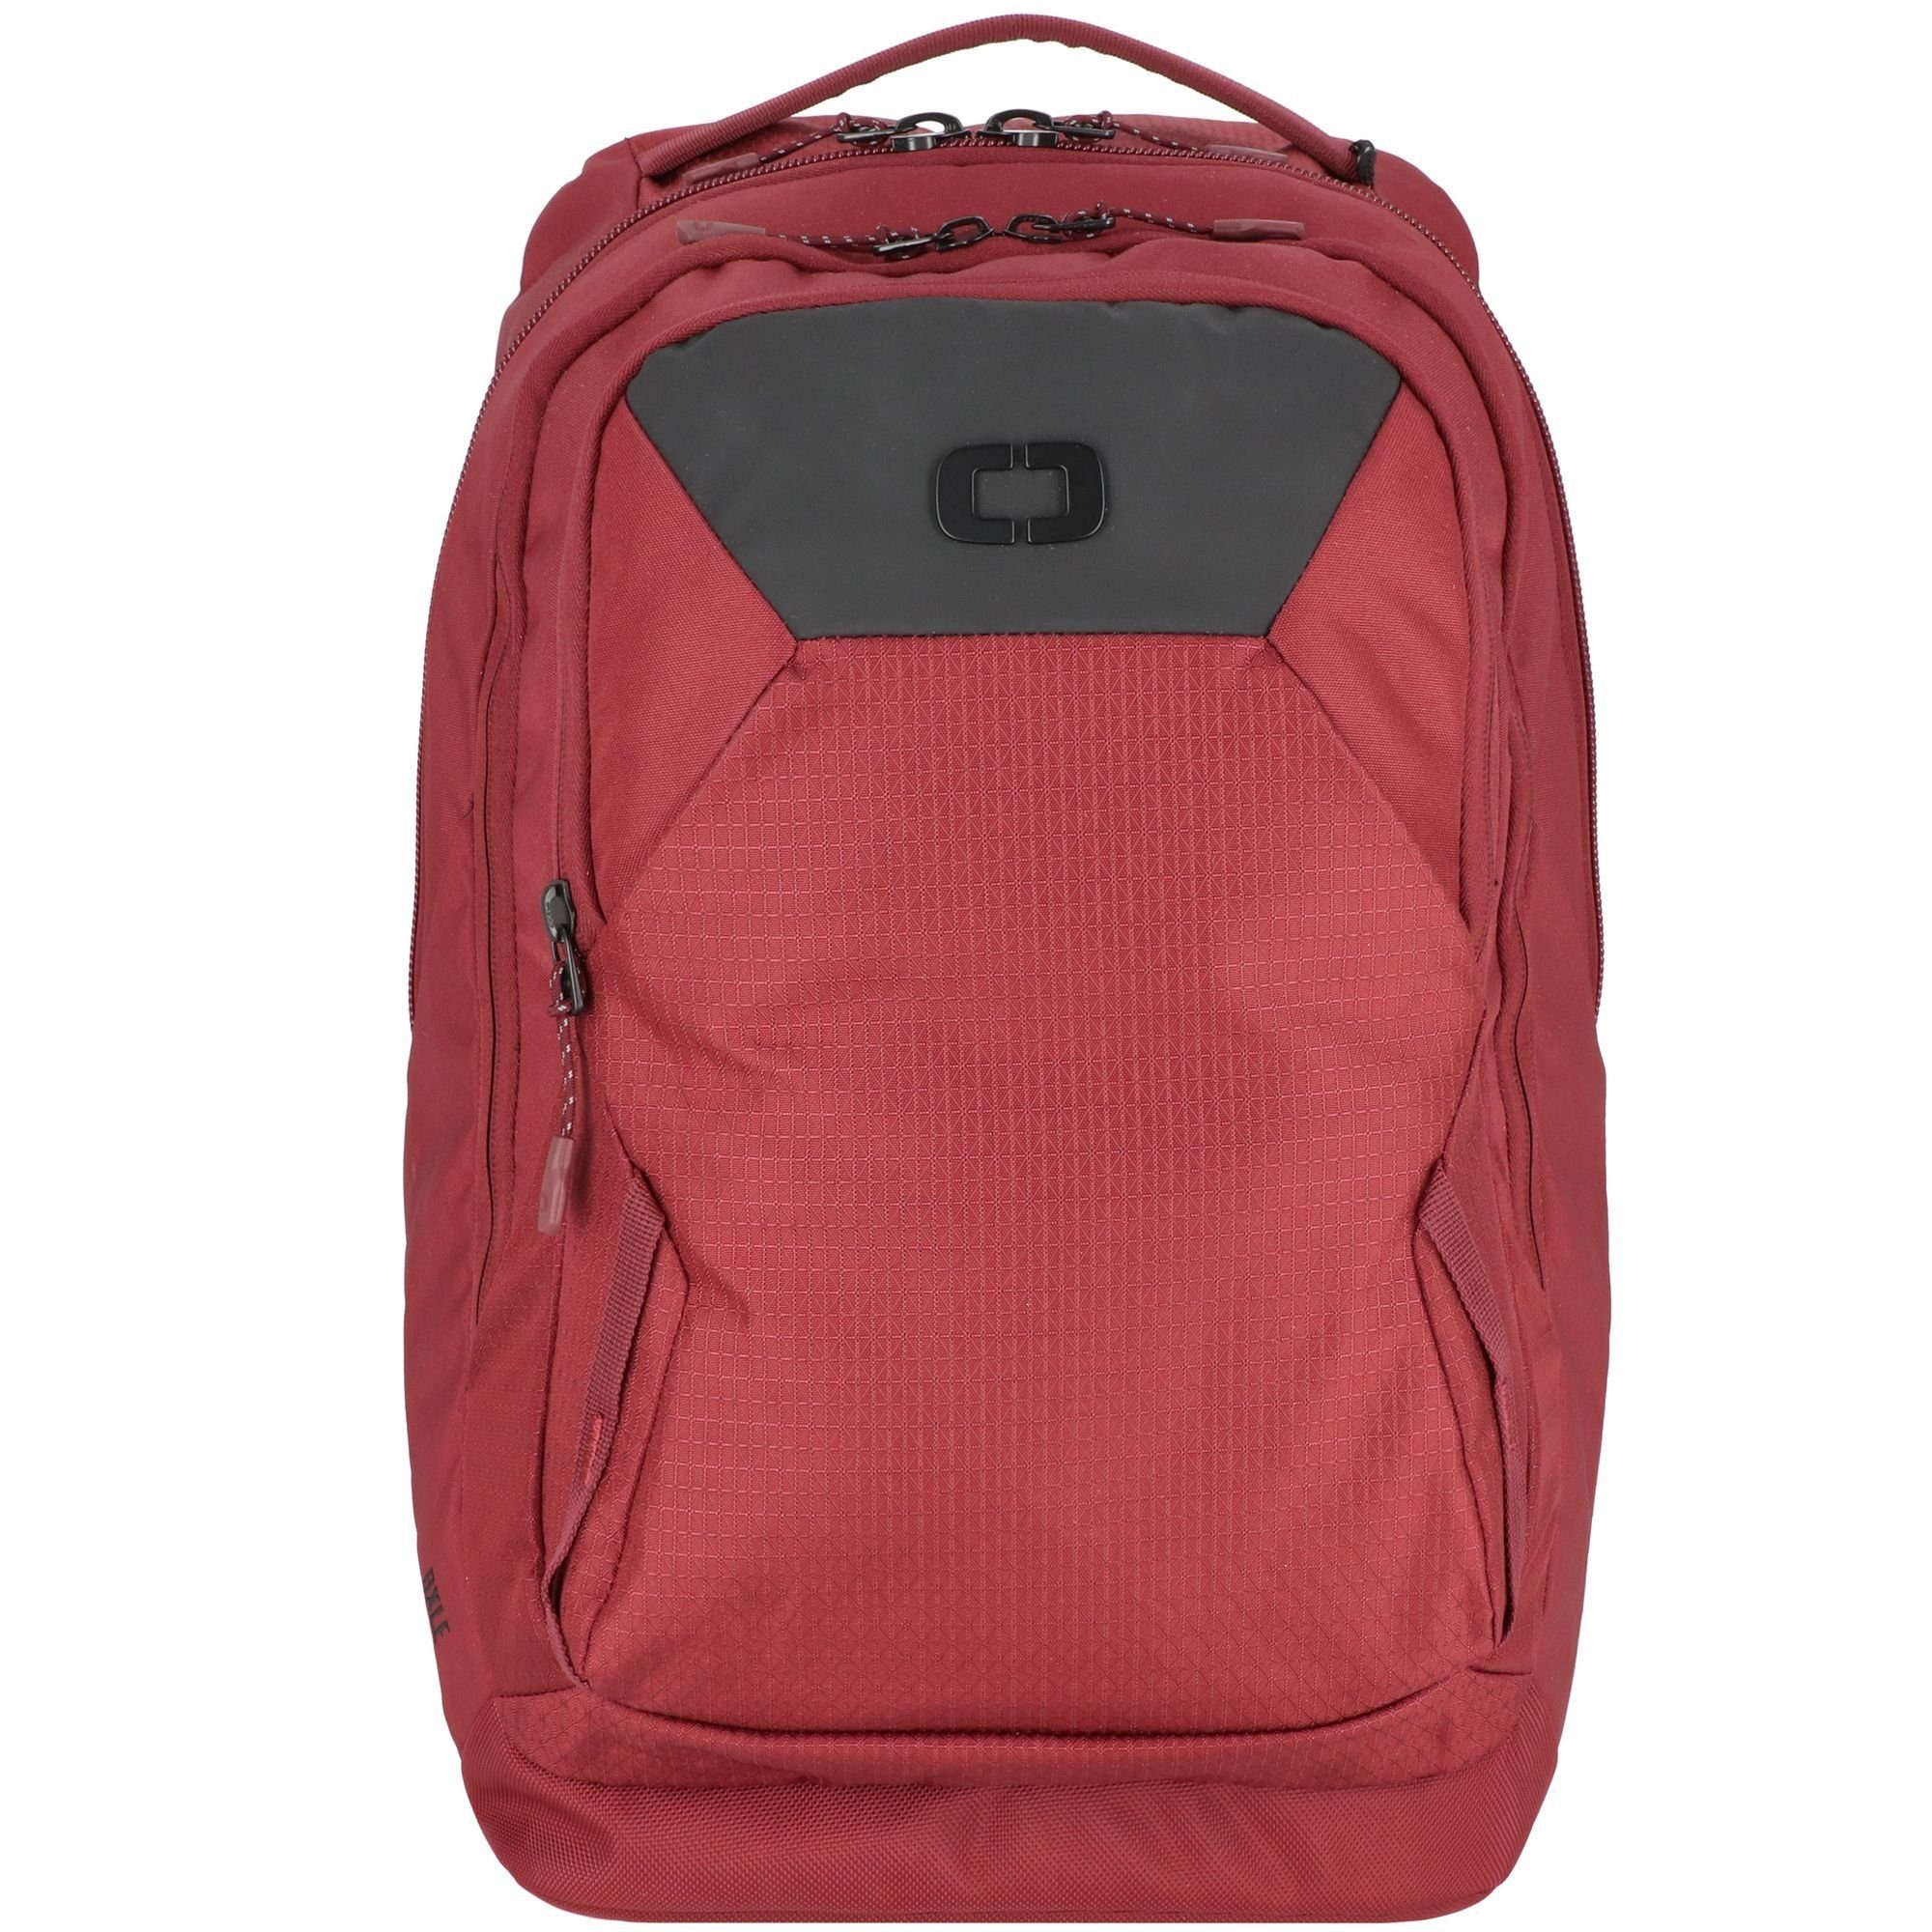 Axle OGIO Pro, burgundy Daypack Polyester